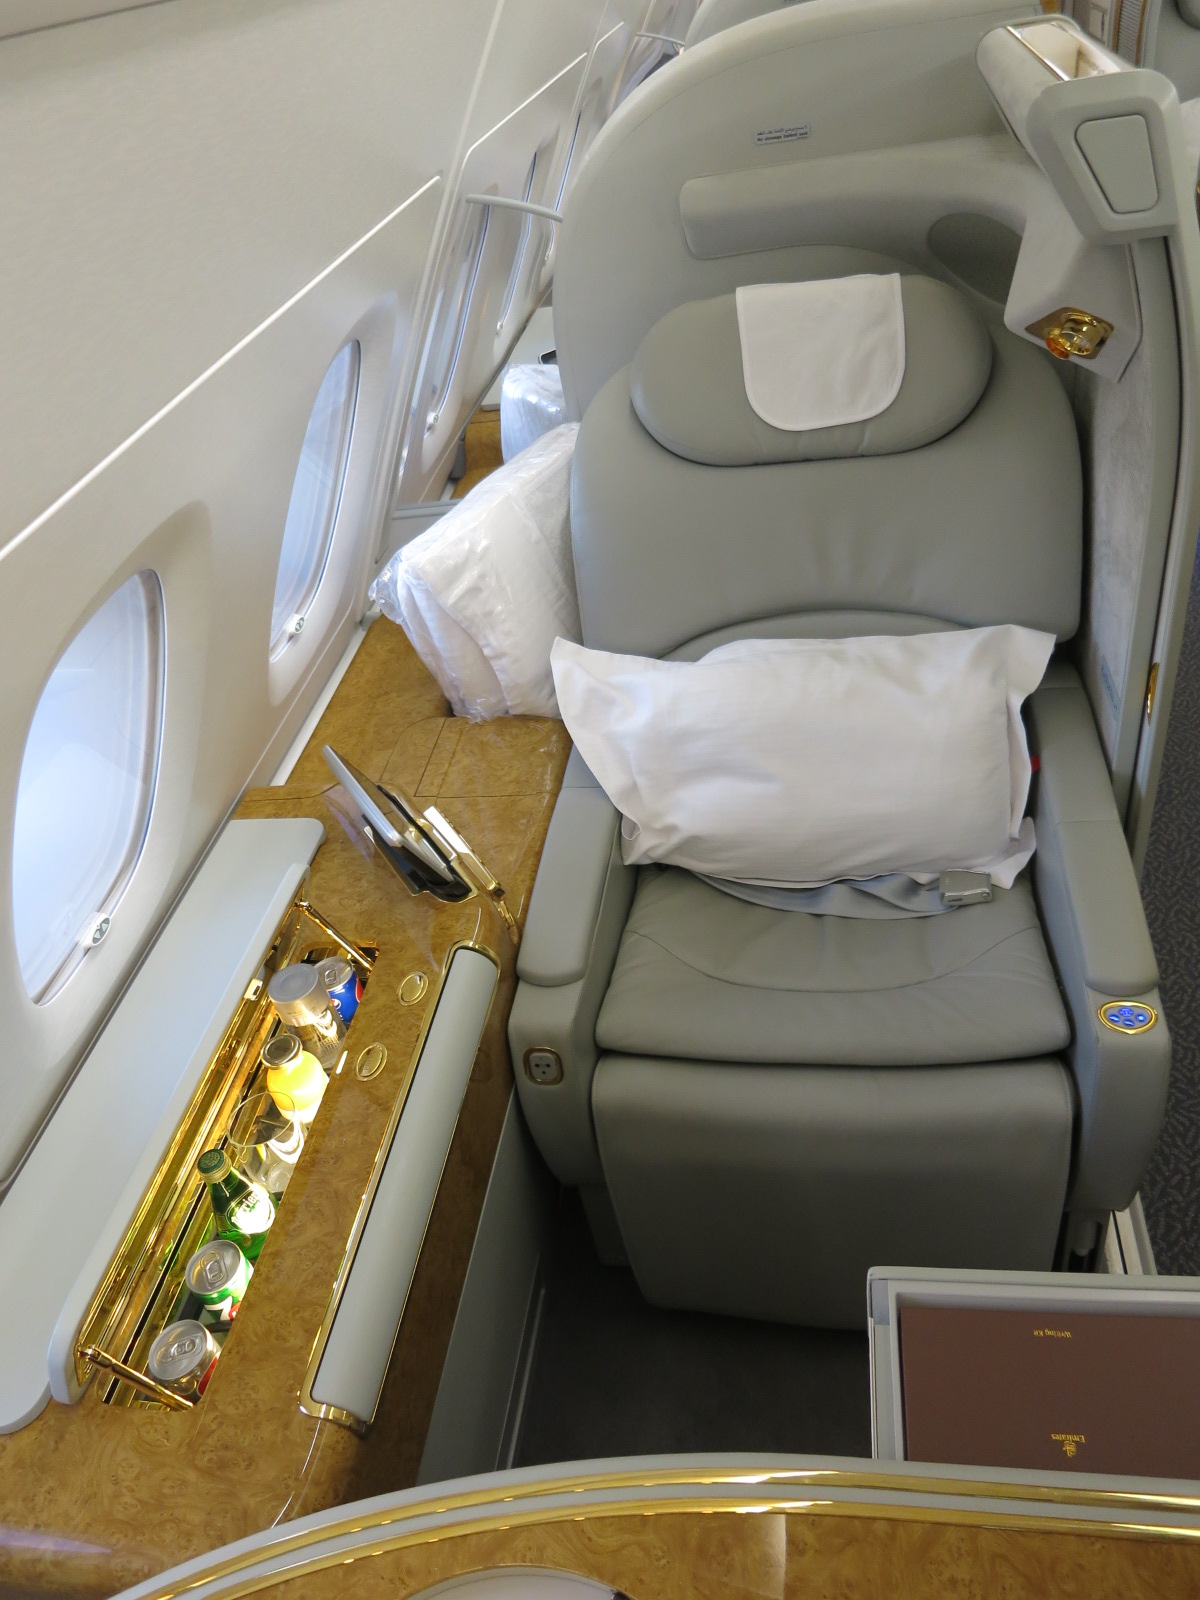 Emirates First Class suites A380 Houston - Dubai seats